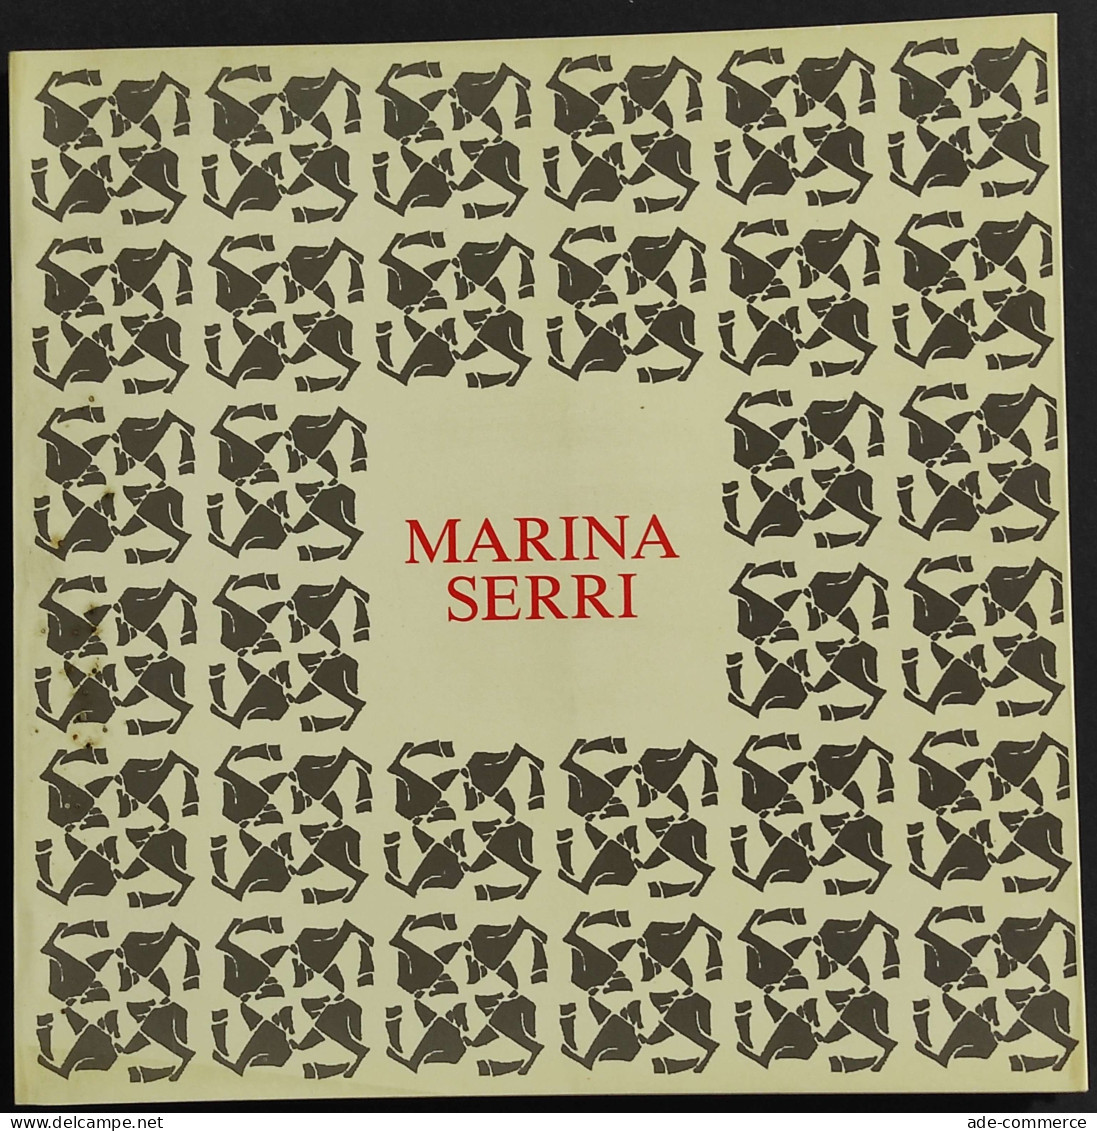 Marina Serri - 1993 - Arts, Antiquity